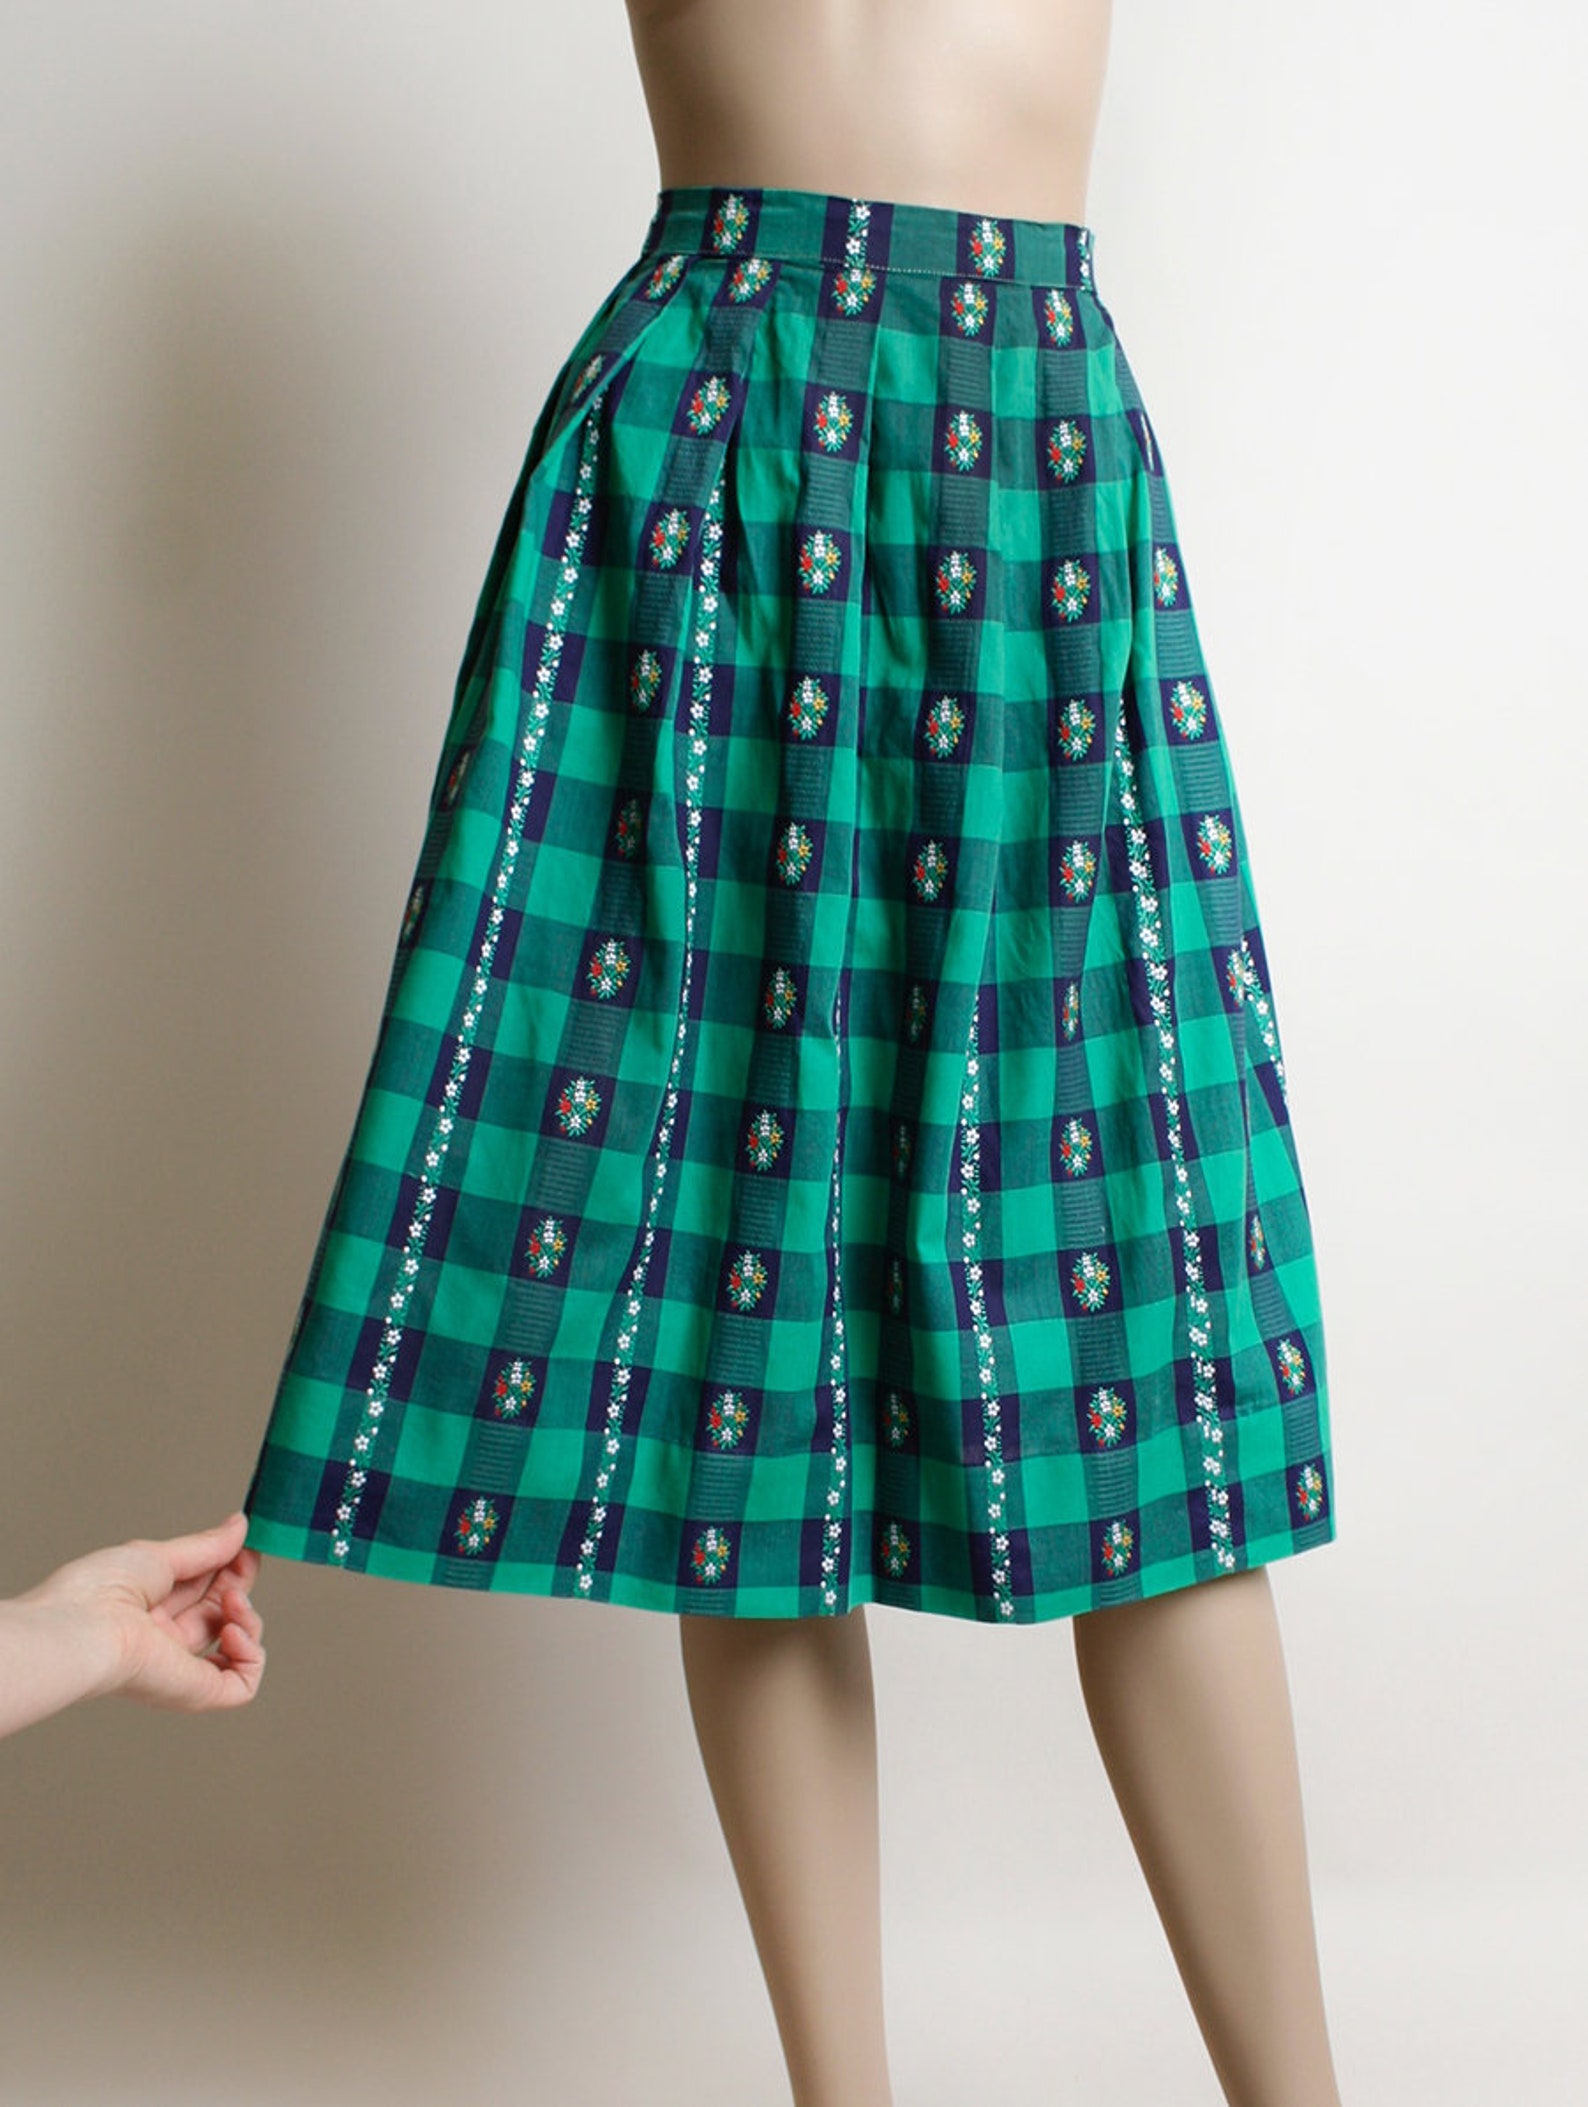 Vintage 1960s Skirt Emerald Green Plaid Cotton Floral Square | Etsy